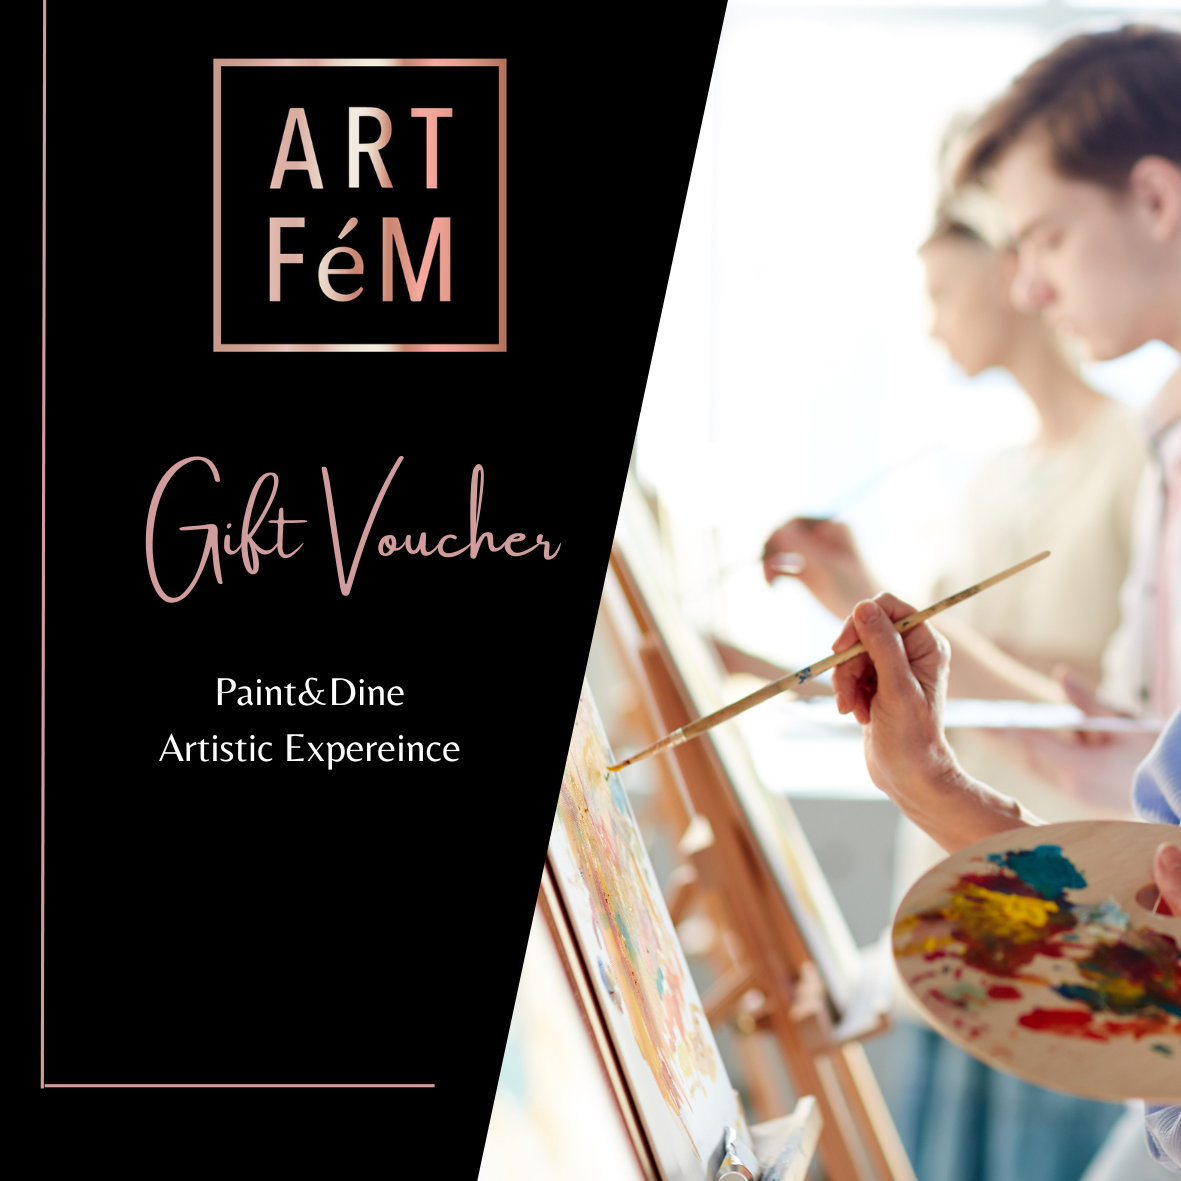 ARTfem Painting Event | Gift Voucher